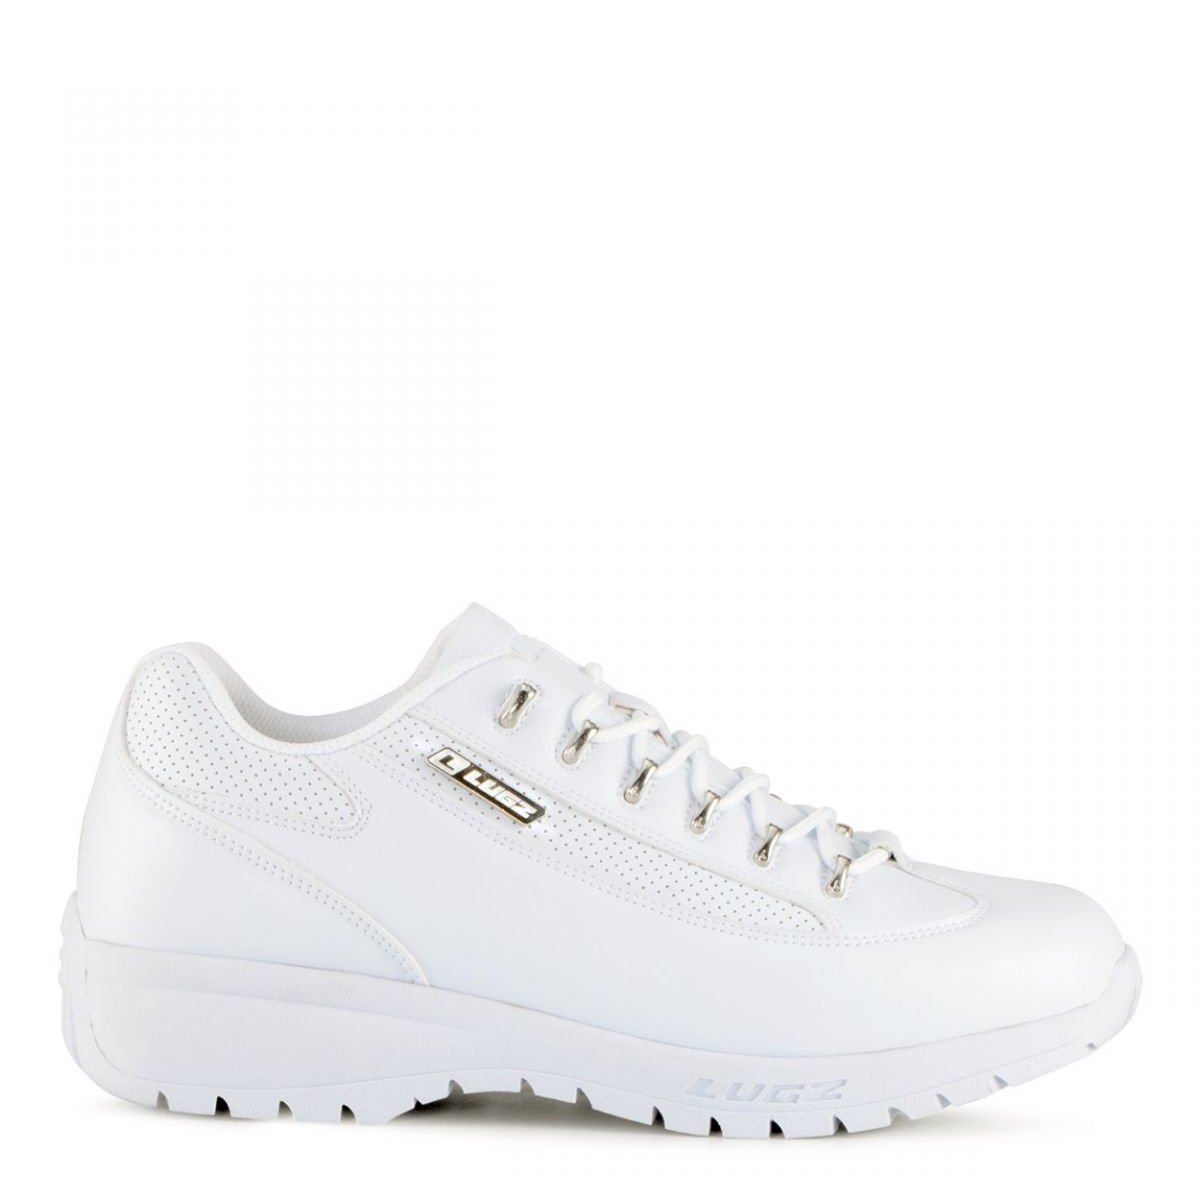 Lugz Men's Express Sneaker White - MEXPRSPV-100 WHITE - WHITE, 9.5